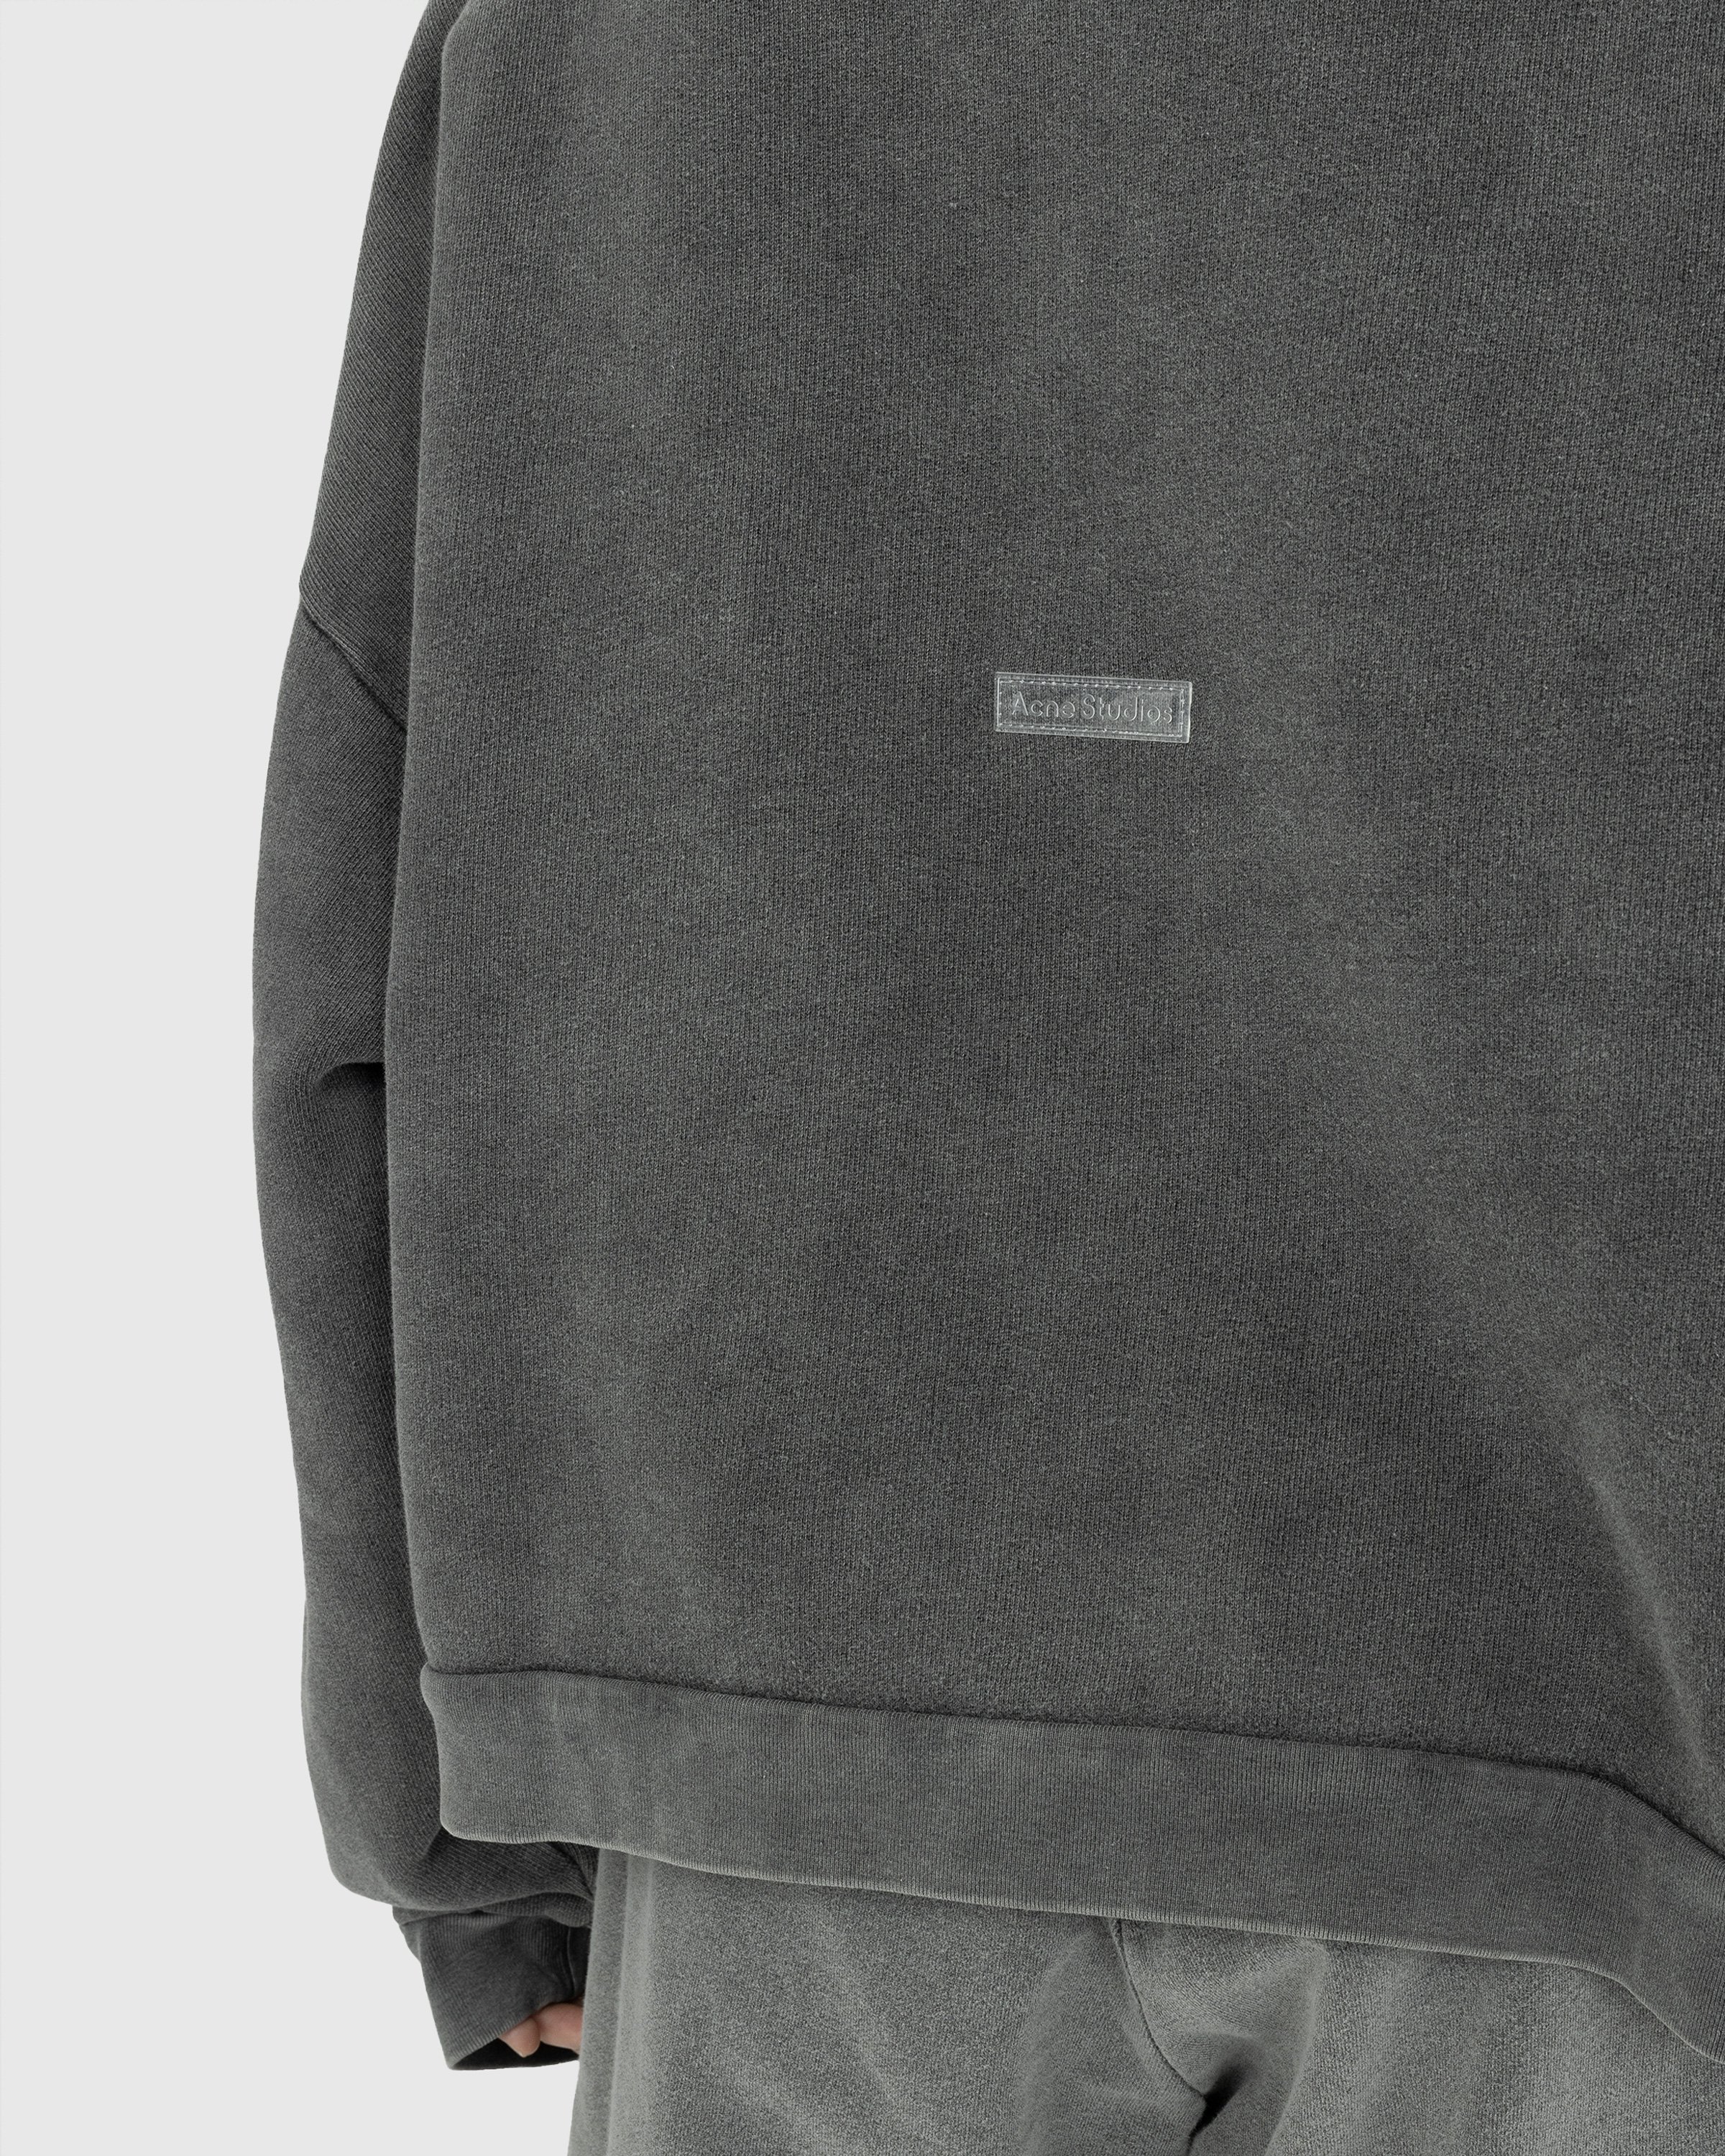 Acne Studios - Hooded Sweatshirt Faded Black - Clothing - Grey - Image 6